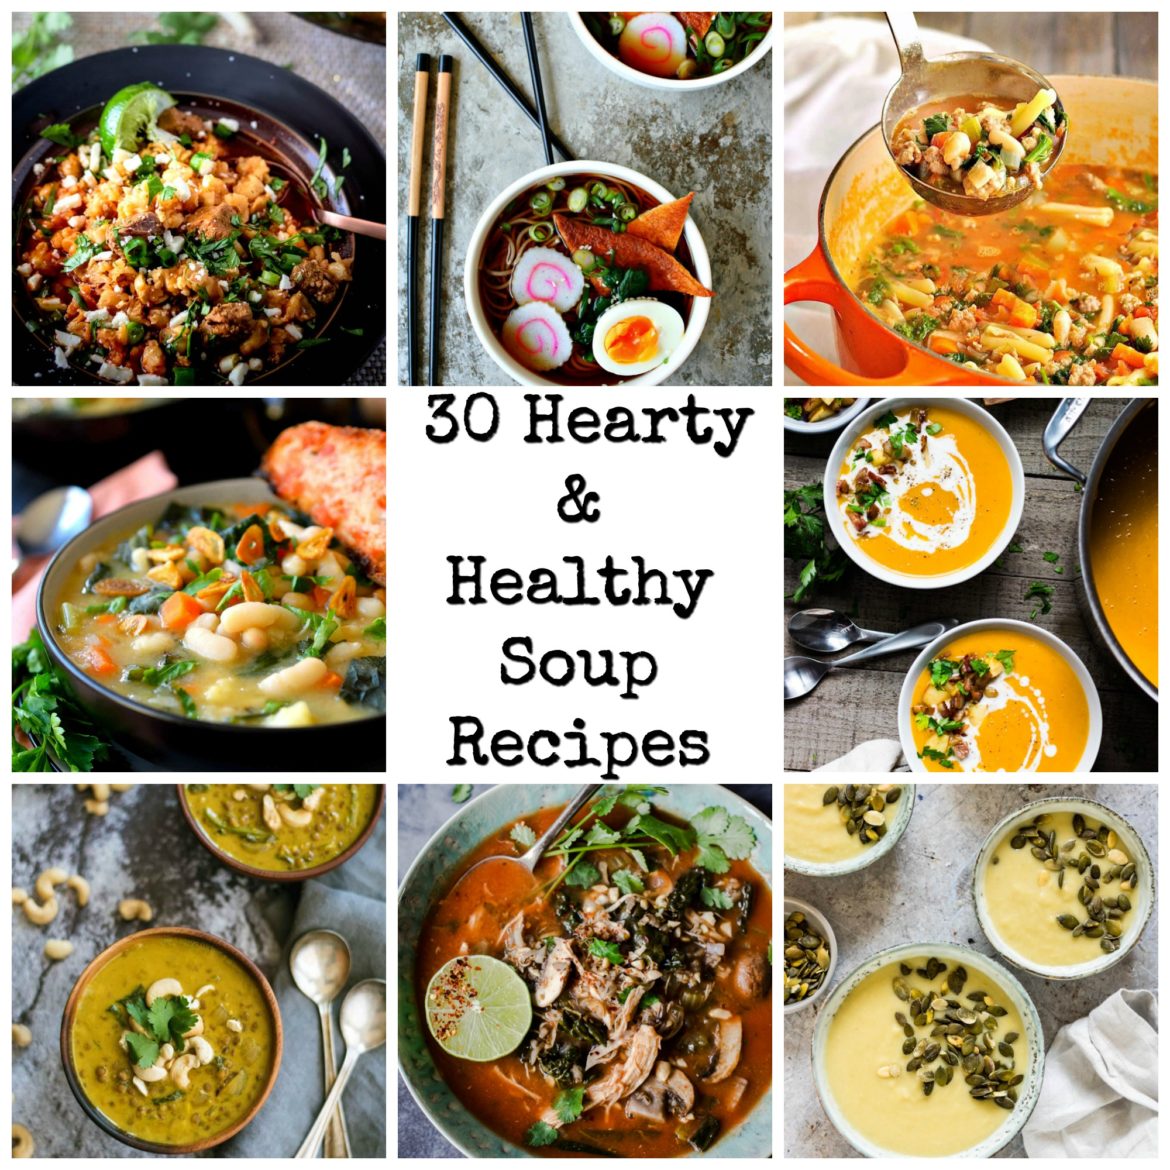 82 Homemade Soup Recipes - My Productive Backyard